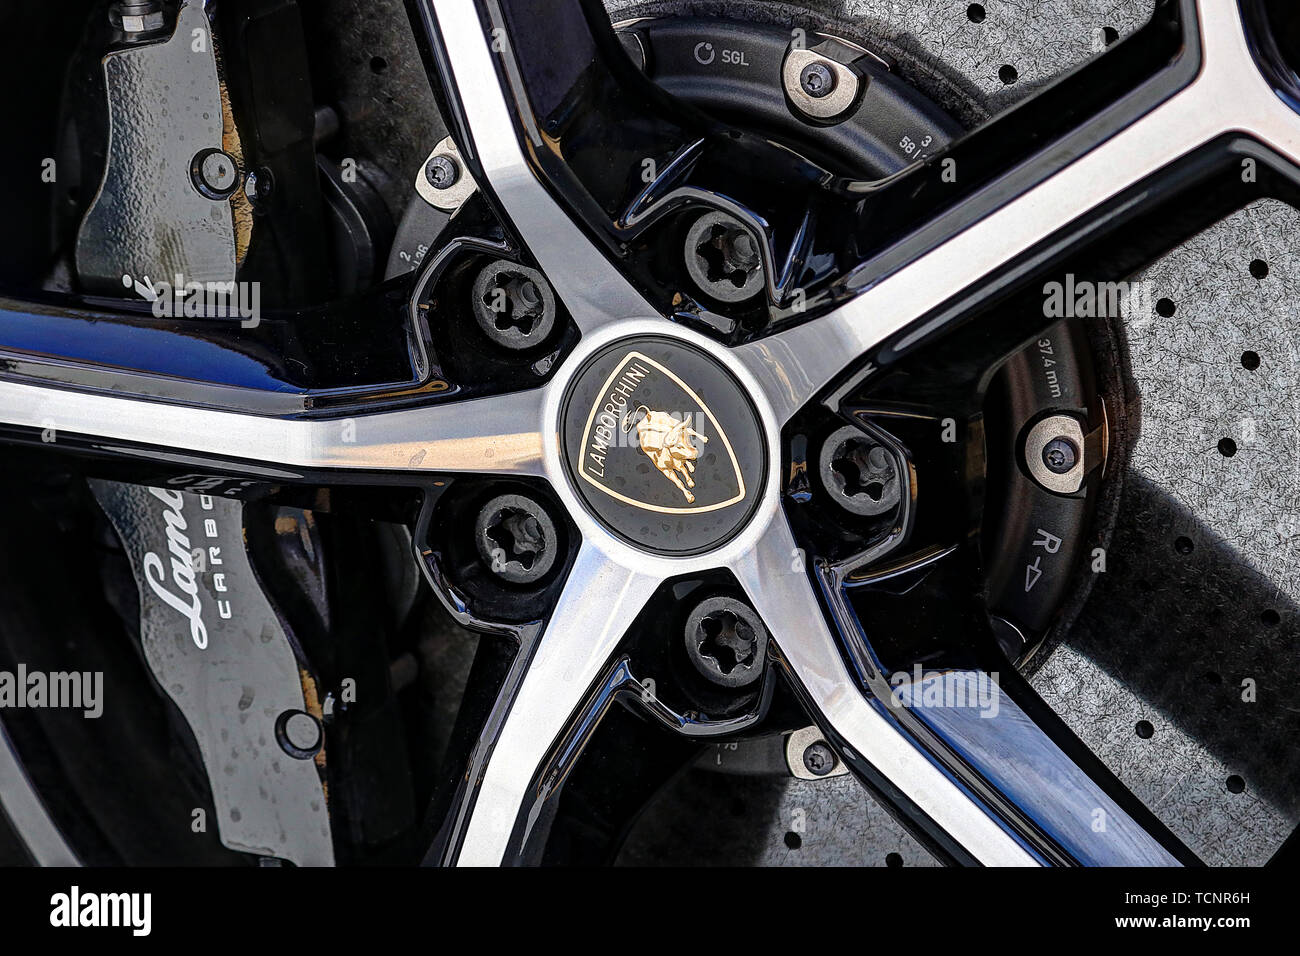 MODENA, ITALY, May 16 2019 - Motor Valley Fest exhibition, Lamborghini wheel desih detail with bull logo Stock Photo